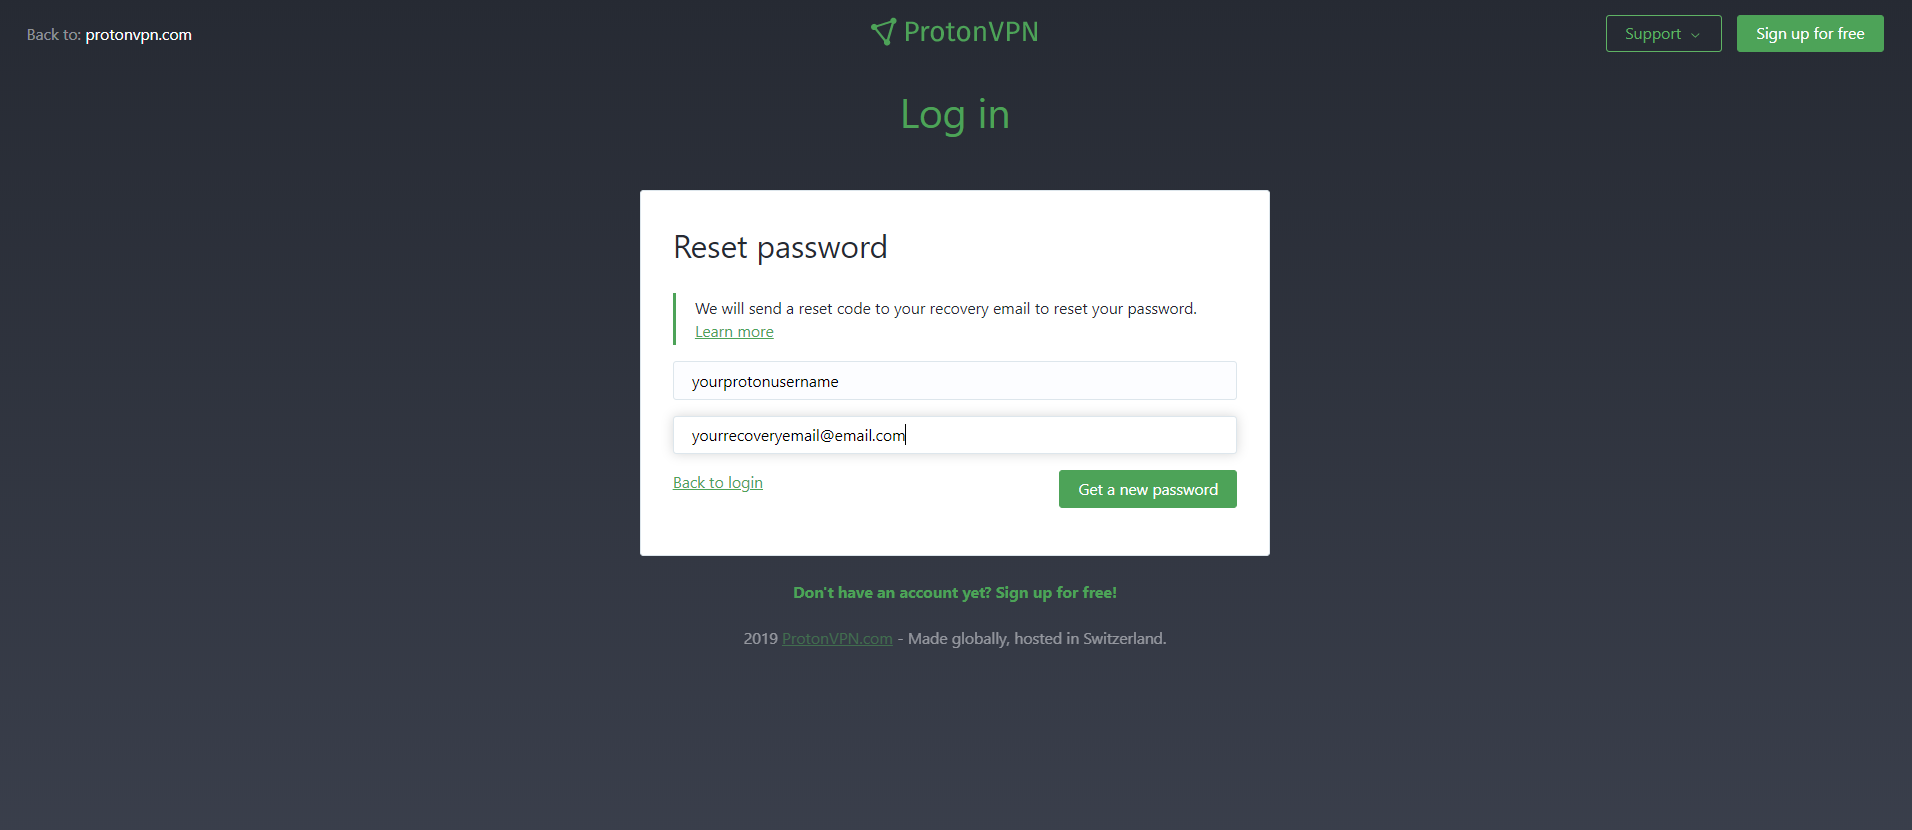 How to reset the ProtonVPN account password - ProtonVPN Support